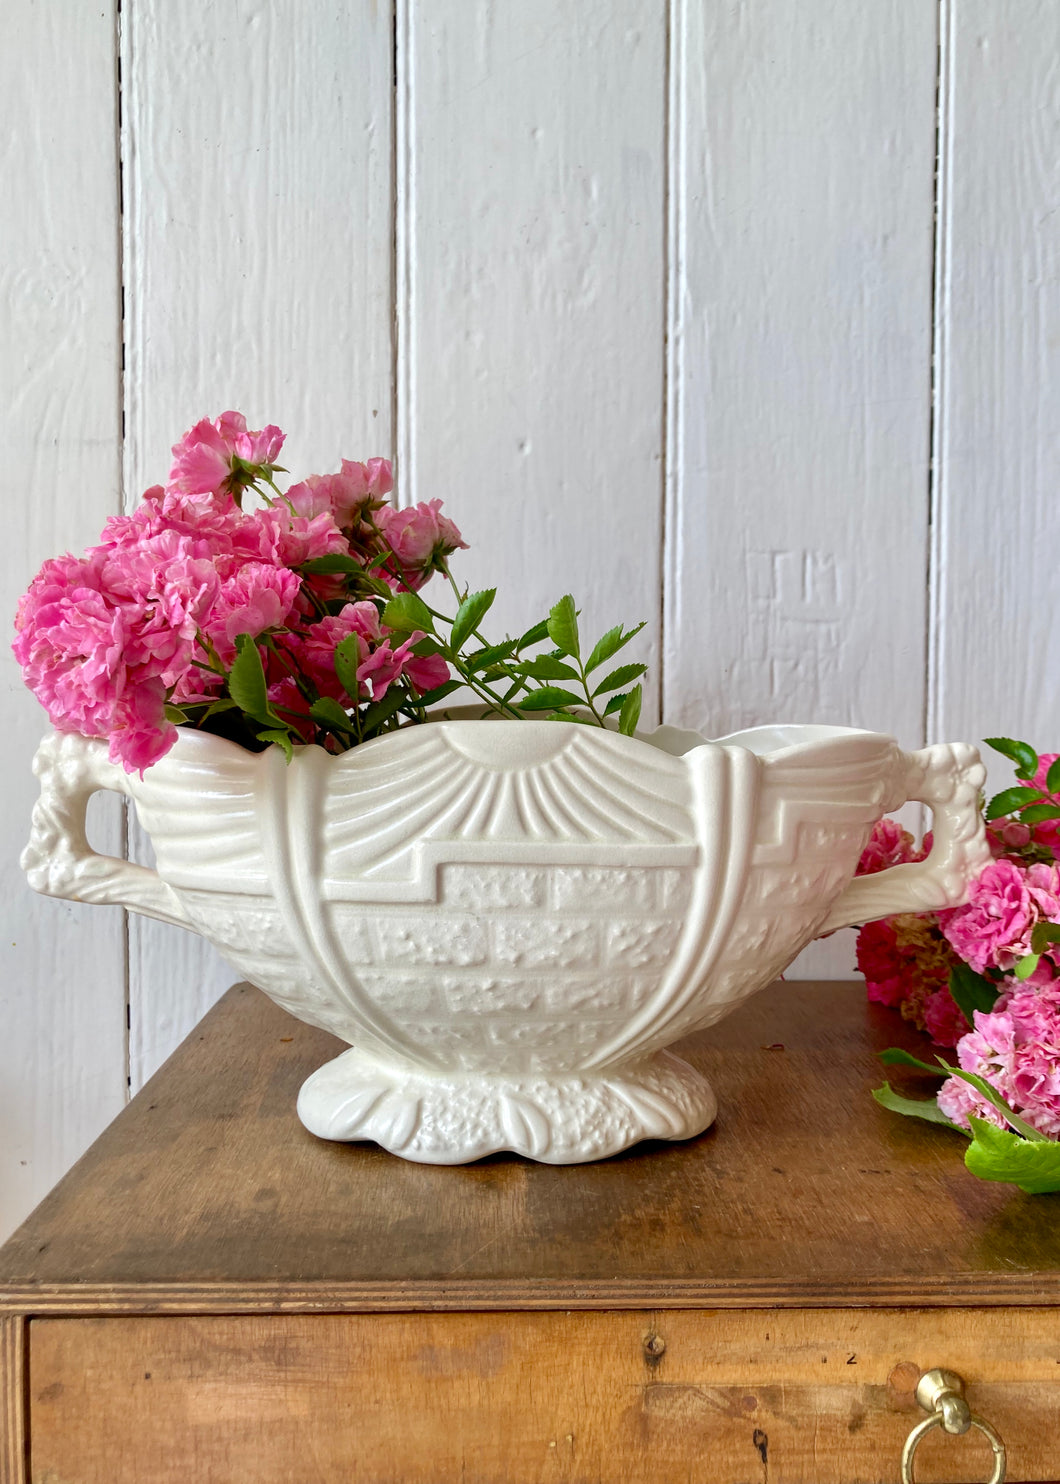 Arthur Wood Garden Wall mantle vase in creamy white